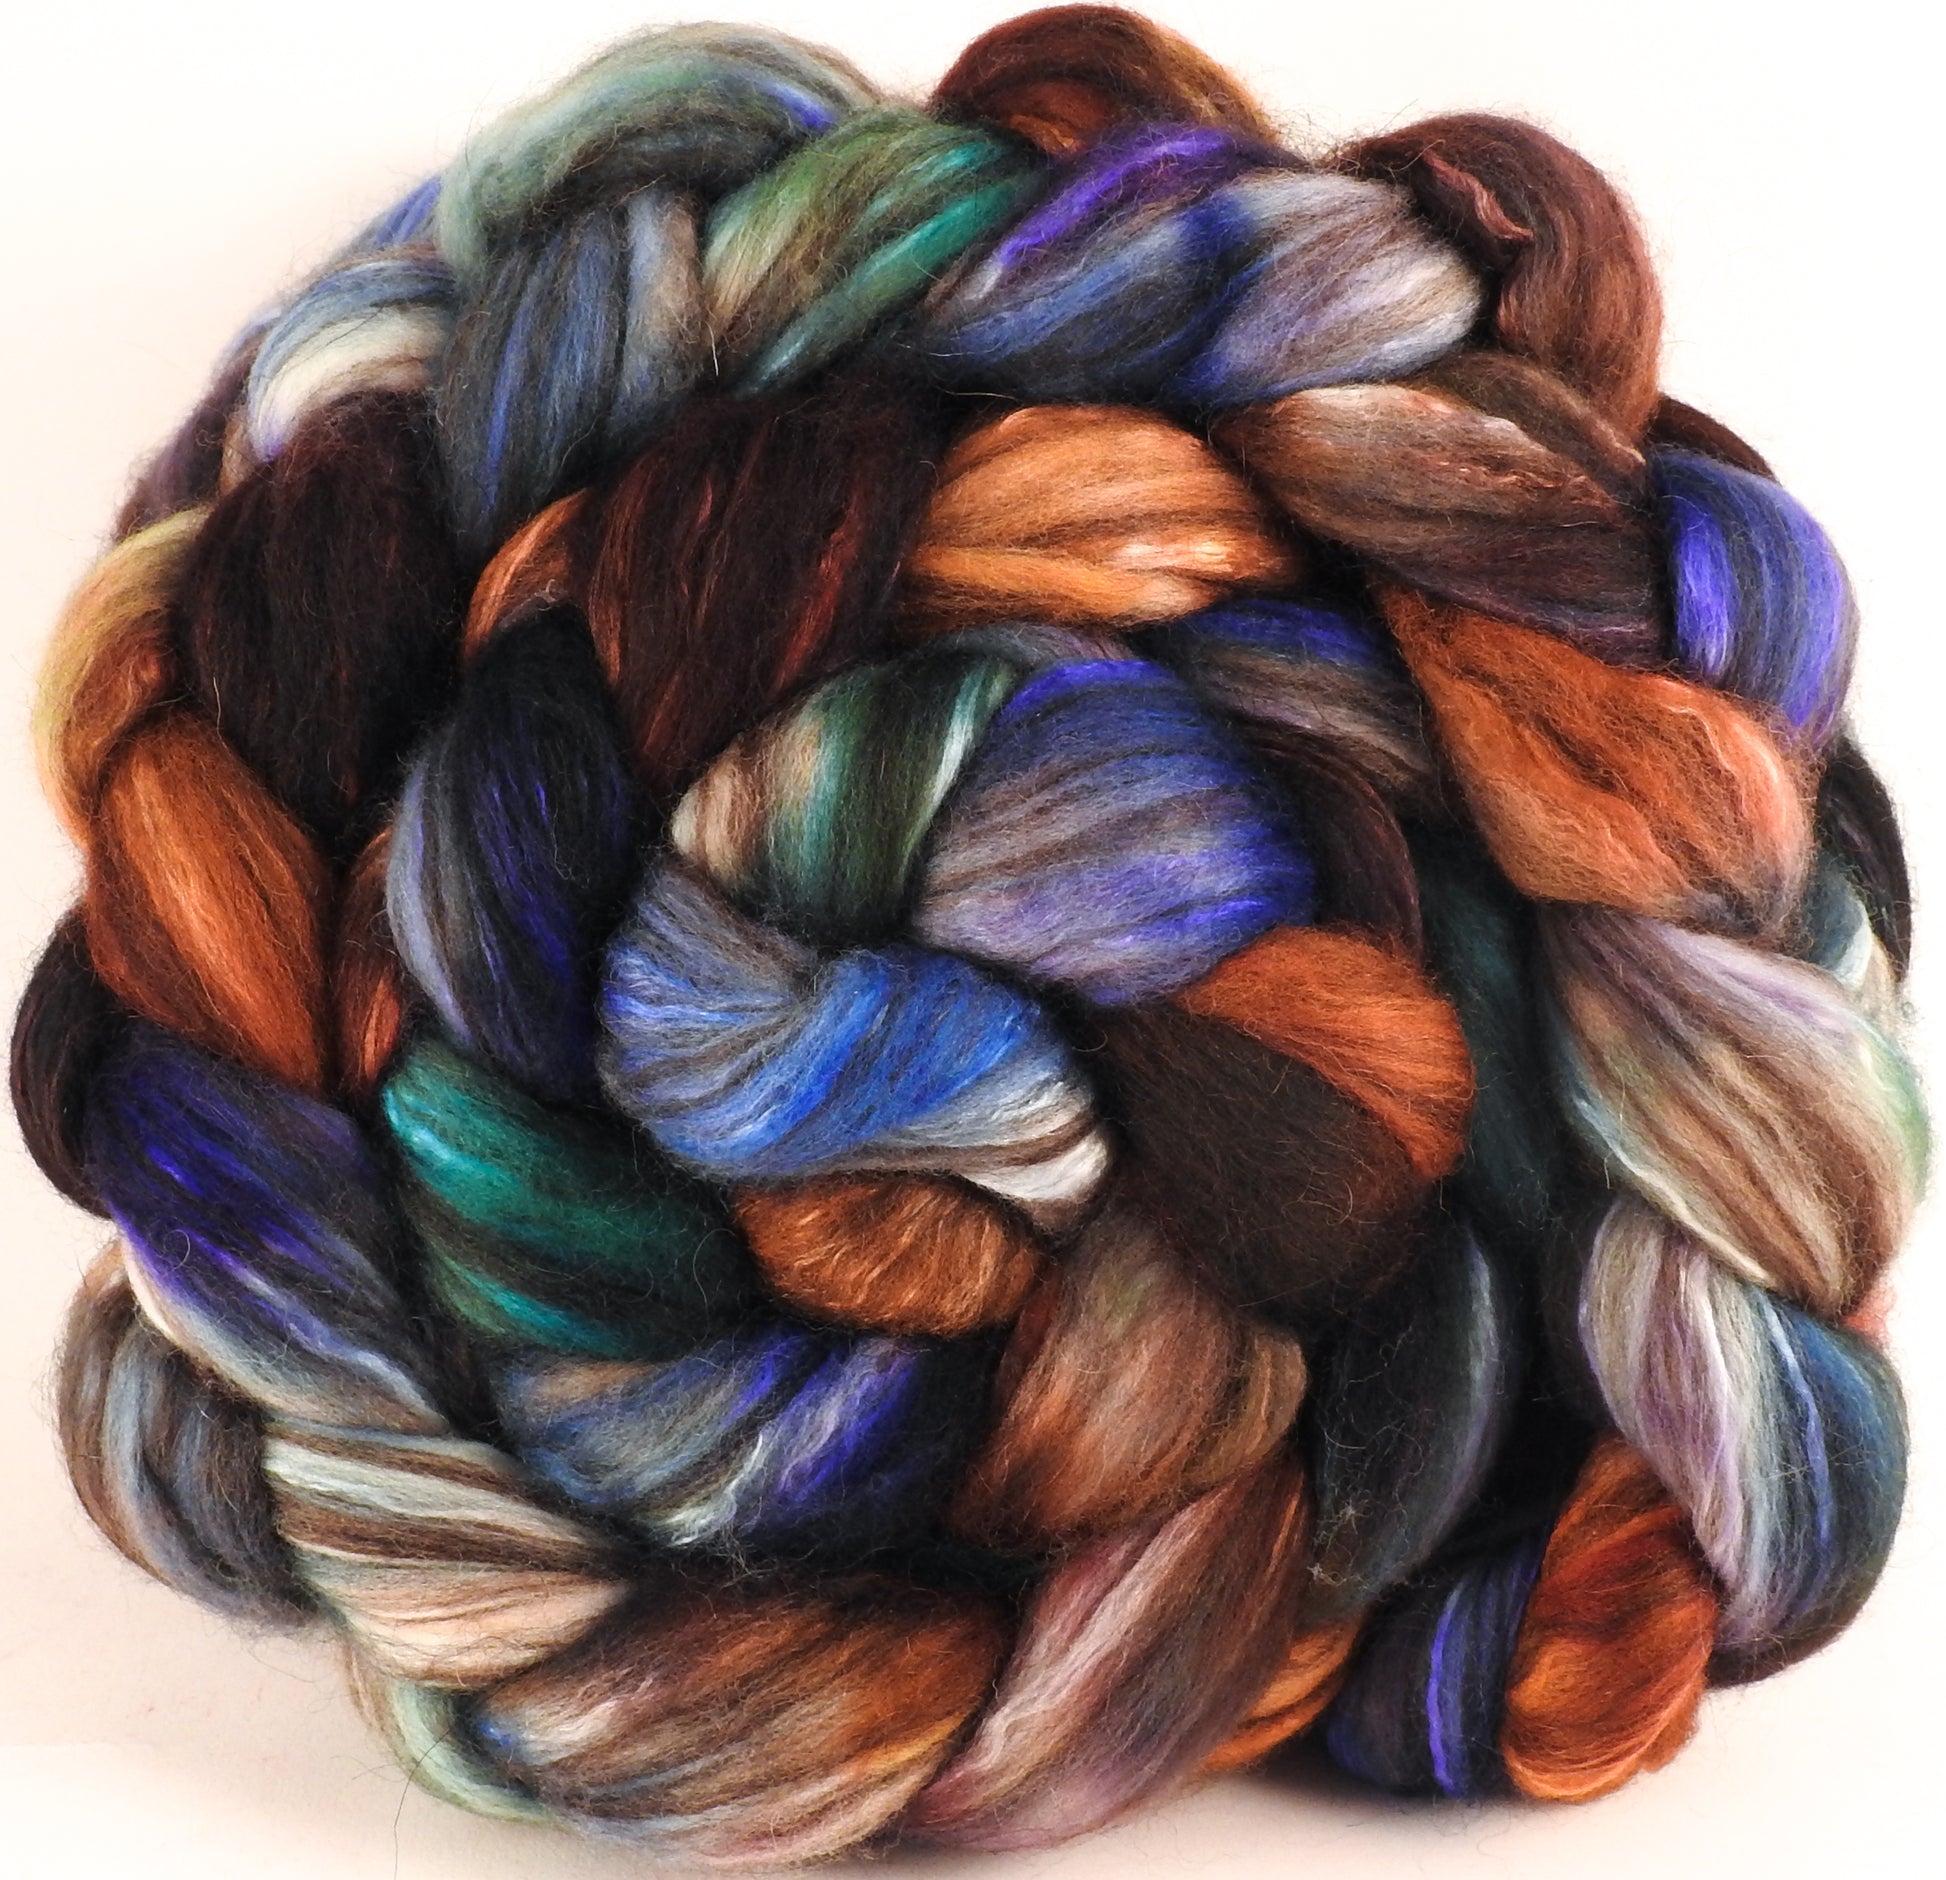 Hand dyed top for spinning - Argyle Socks (5.3 oz) - 18.5 mic merino/ camel/ brown alpaca/ mulberry silk/ (40/20/20/20) - Inglenook Fibers